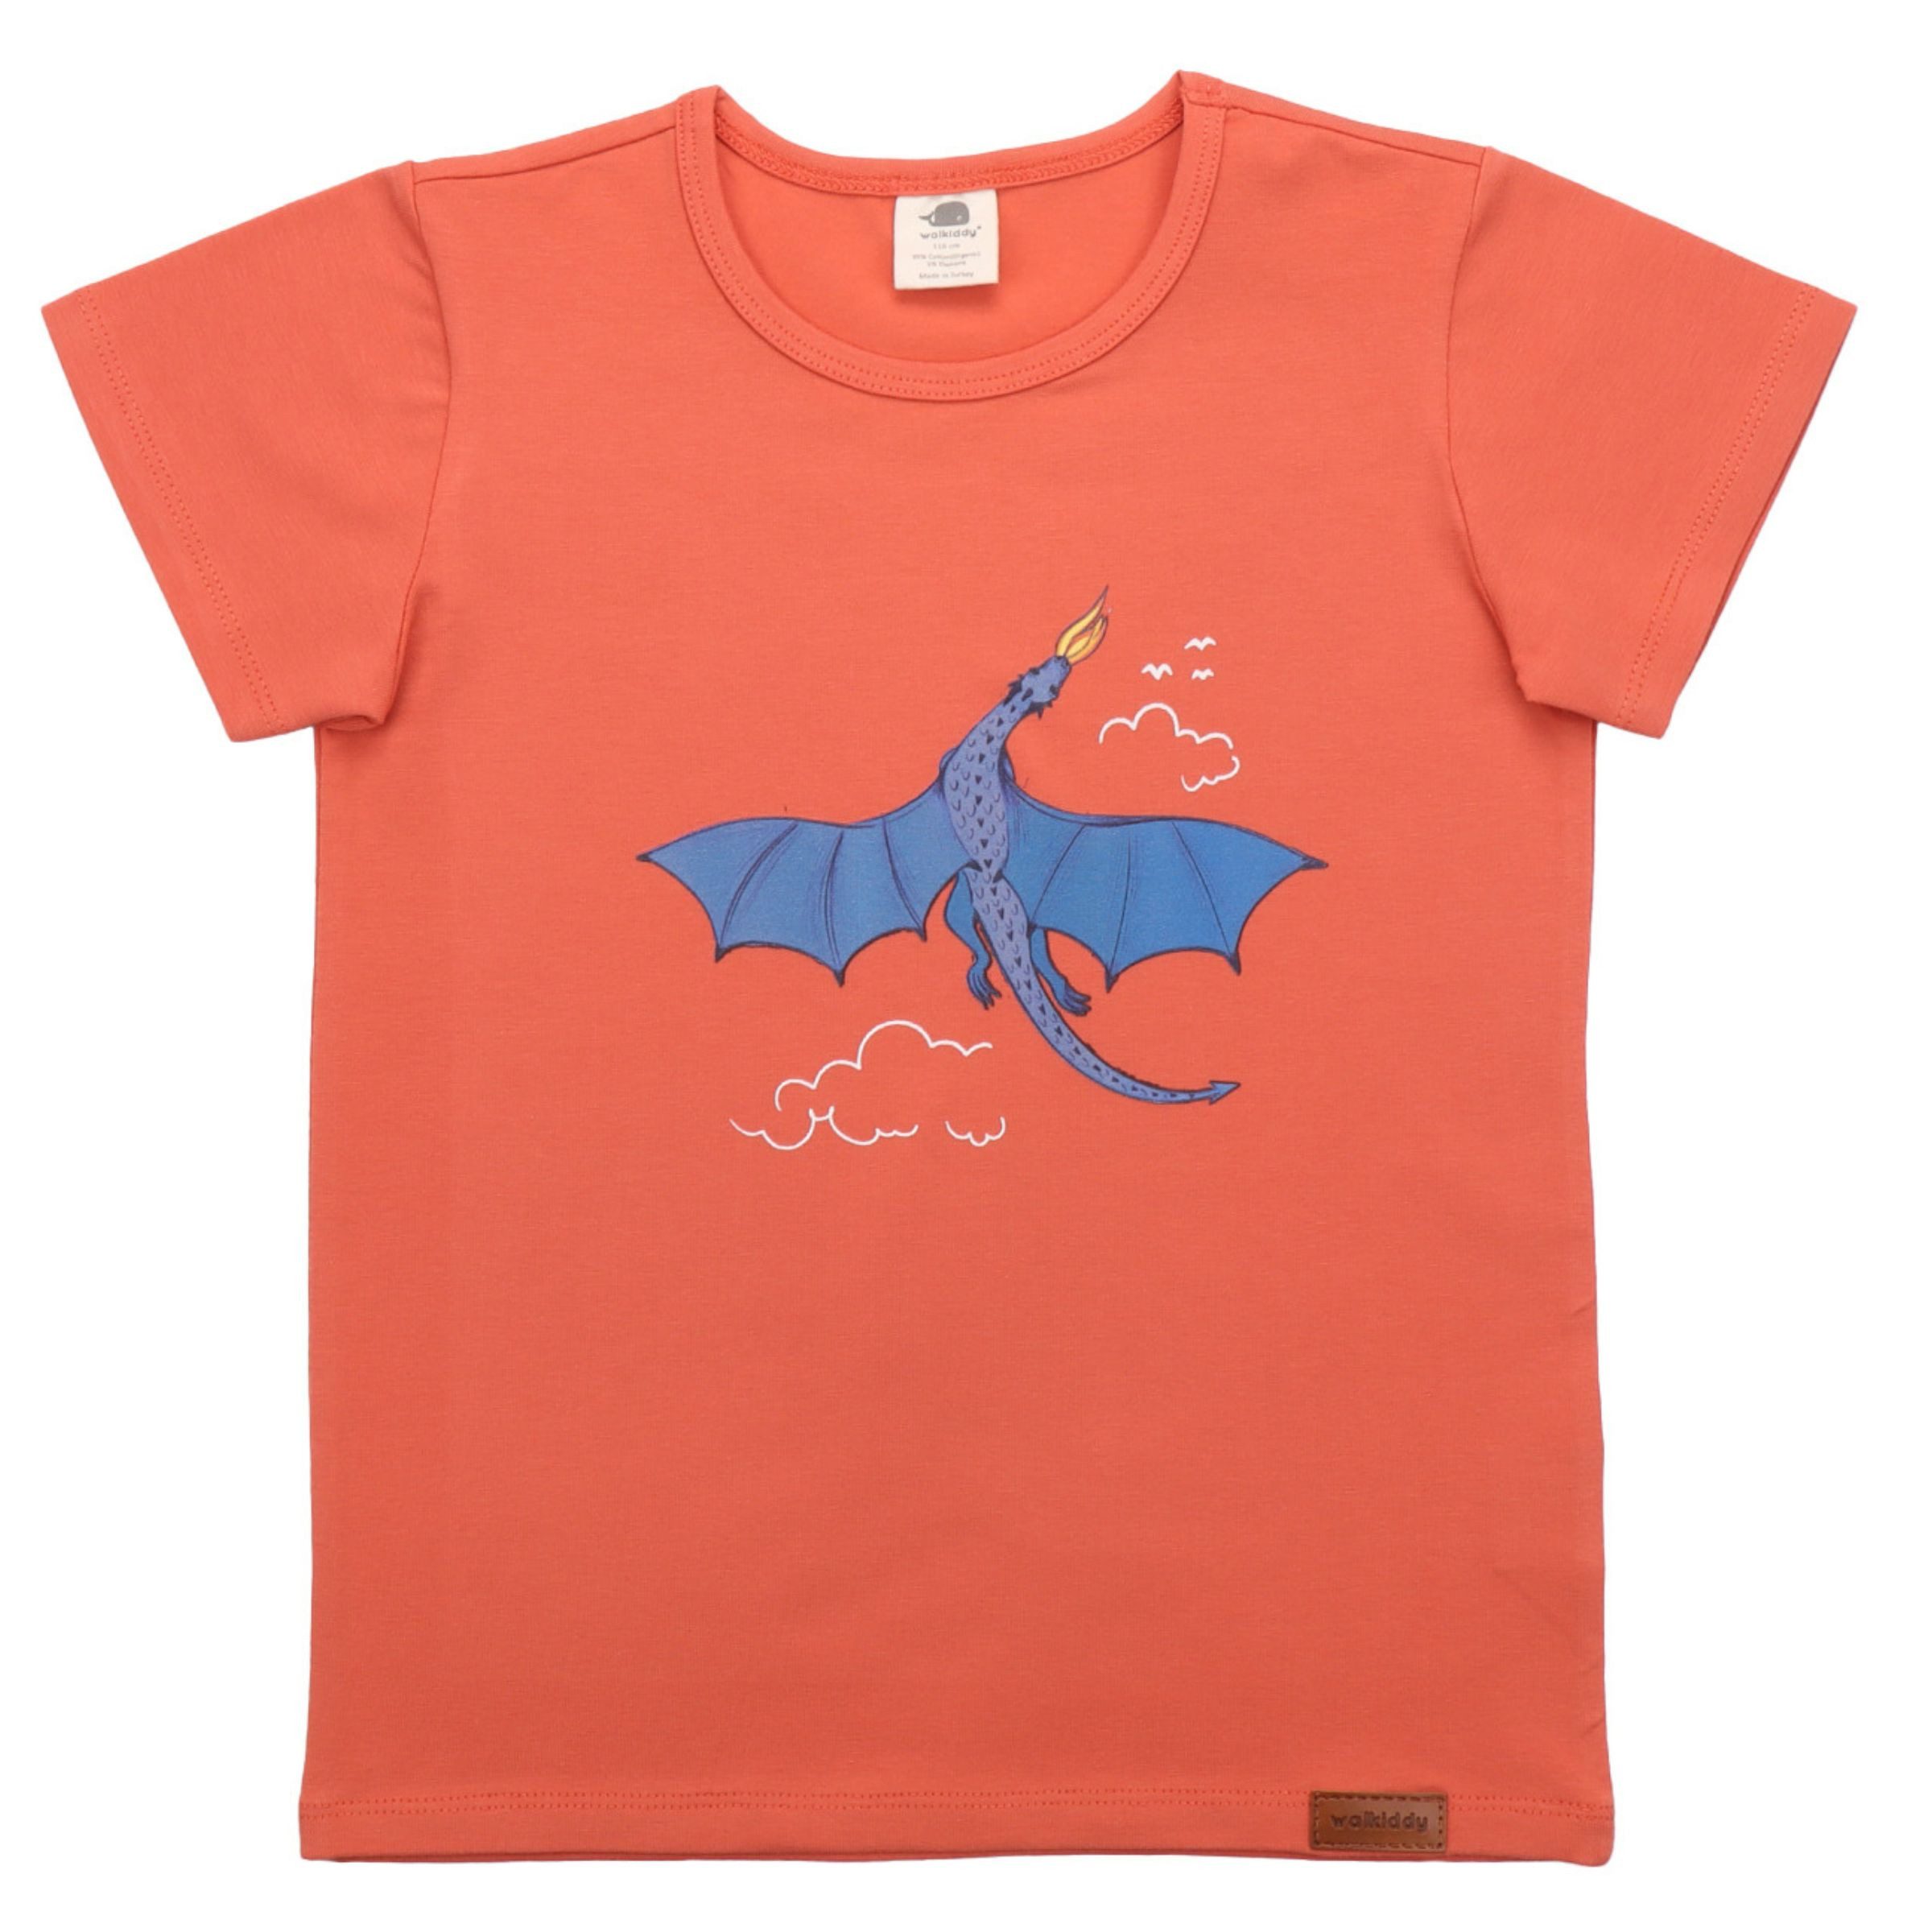 Walkiddy T-Shirt Walkiddy T-Shirt Rot Dragons Drachen 146